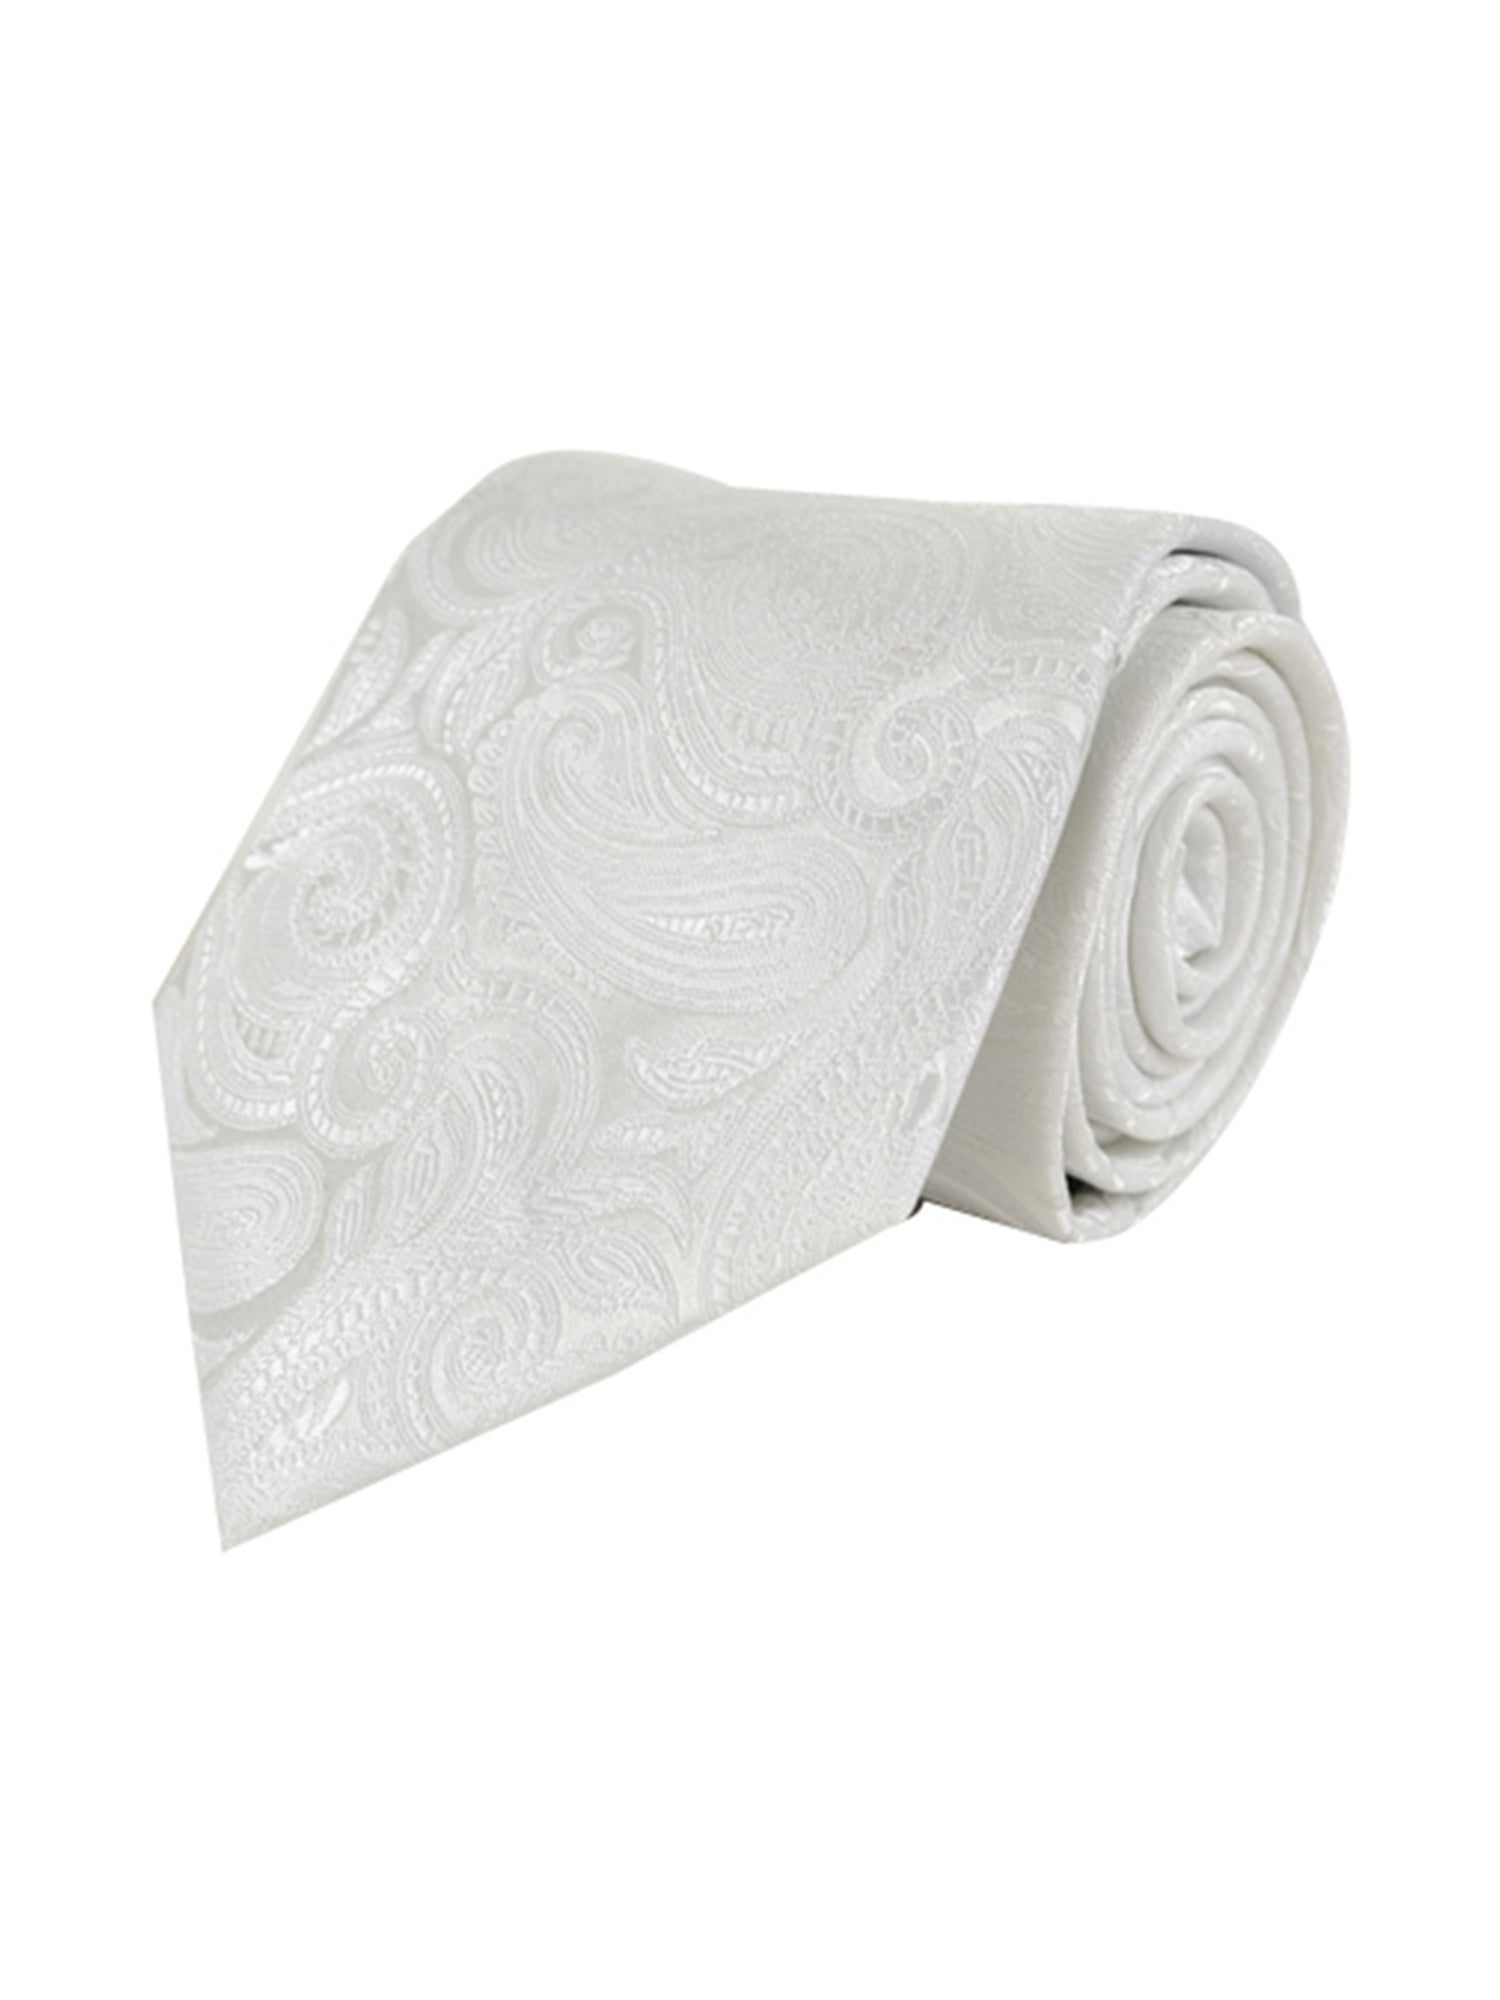 Men's Paisley Microfiber Poly Woven Wedding Neck Tie Neck Tie TheDapperTie White Regular 